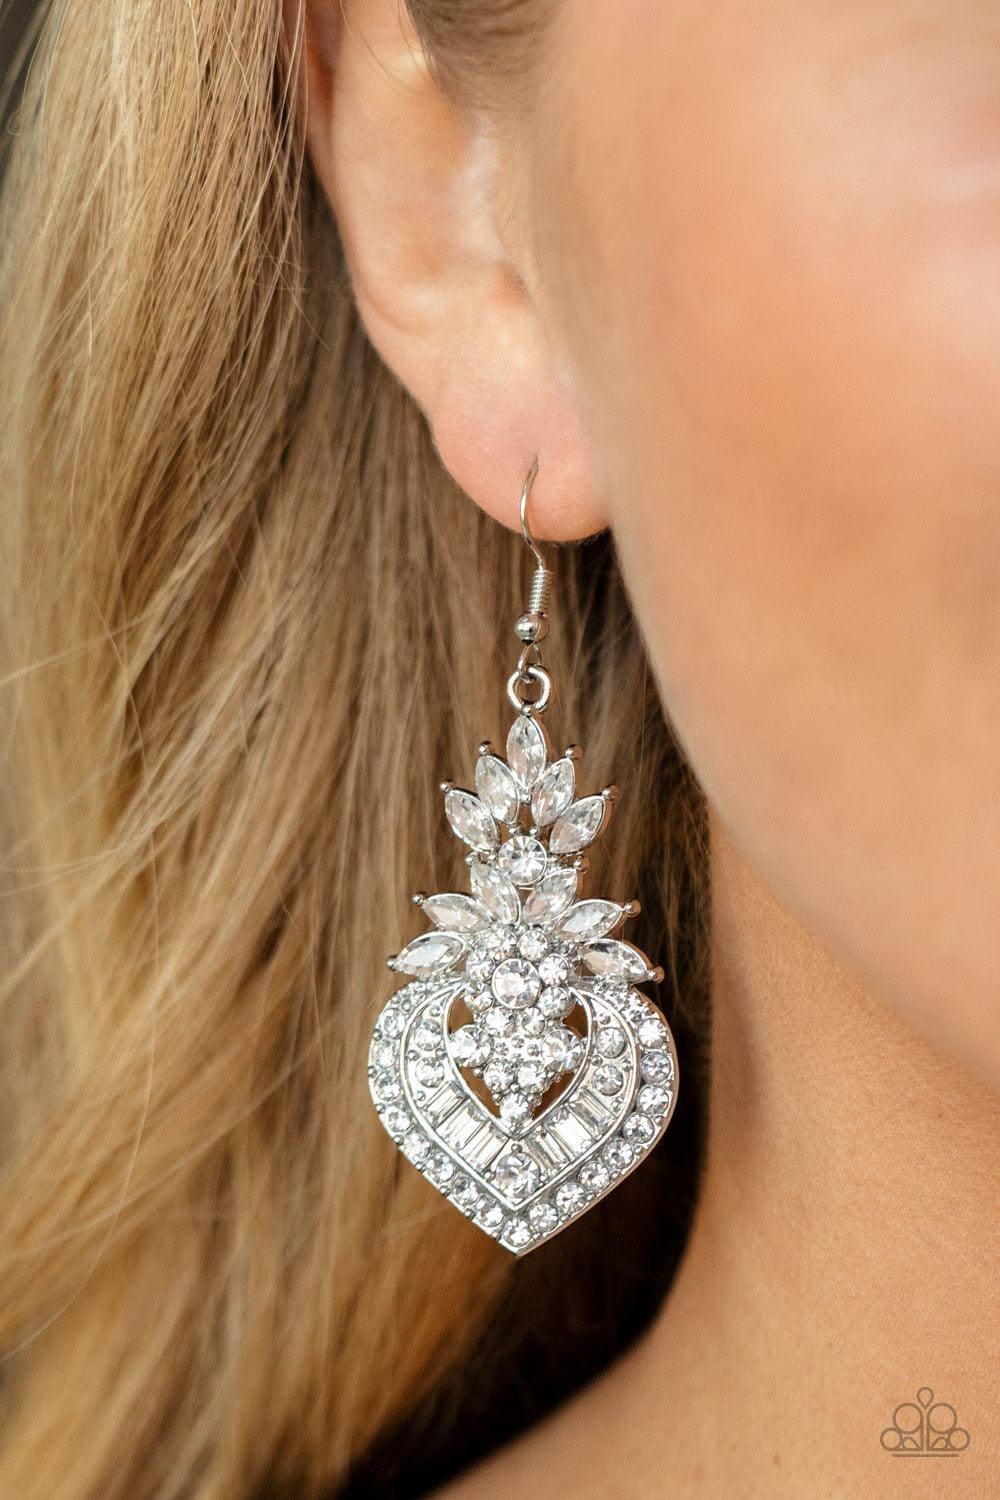 Paparazzi Accessories - Royal Hustle - White Earrings - Bling by JessieK